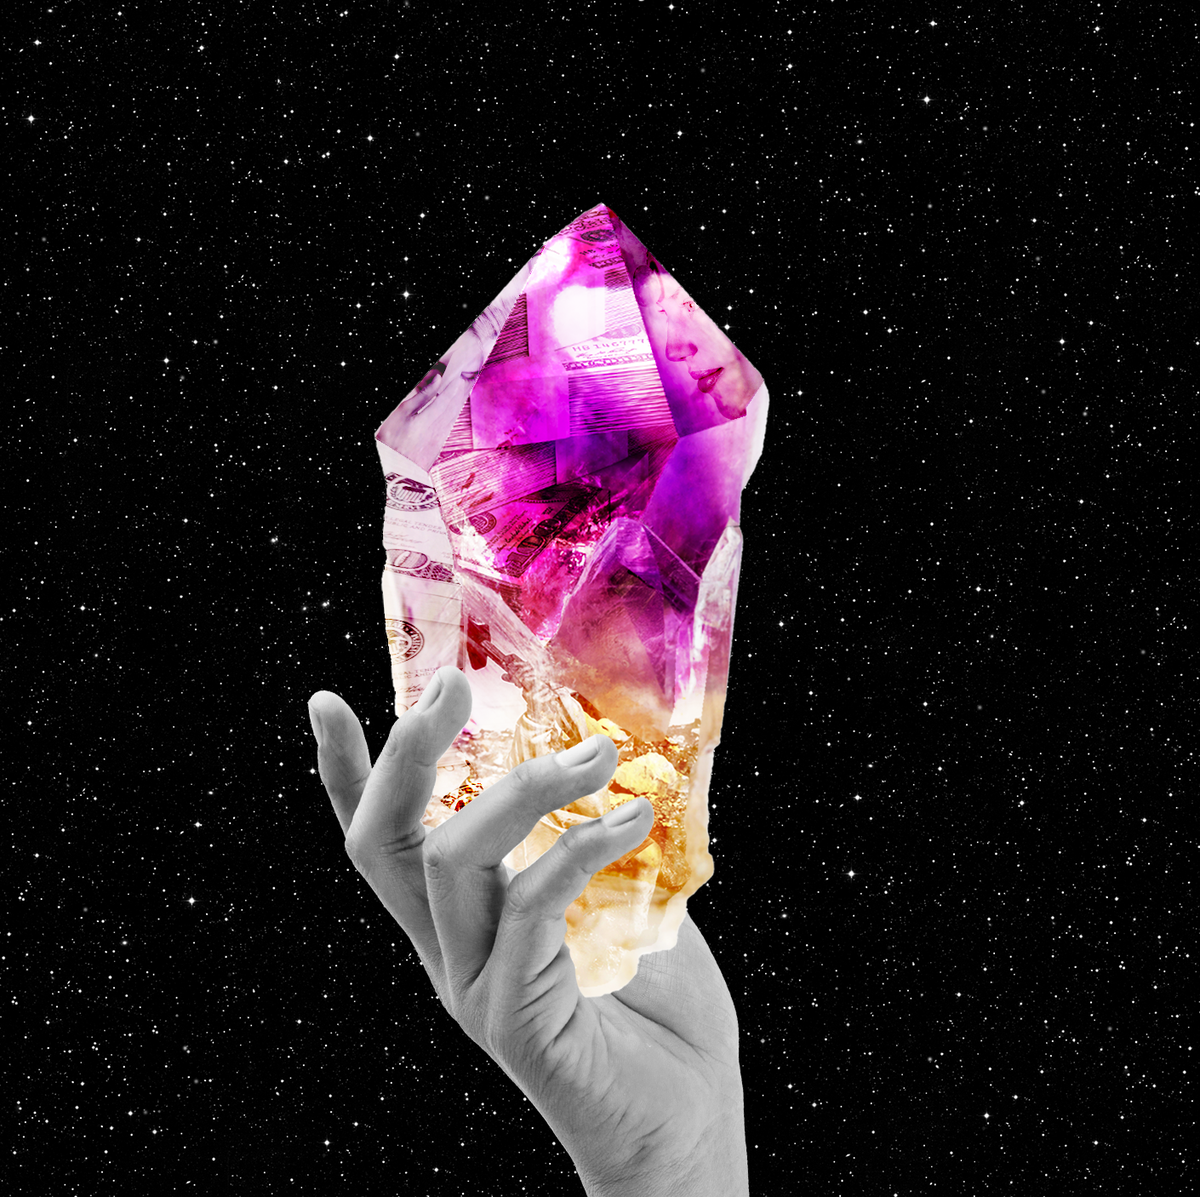 Mystical crystal of medium size, shining and translucent. fantasy